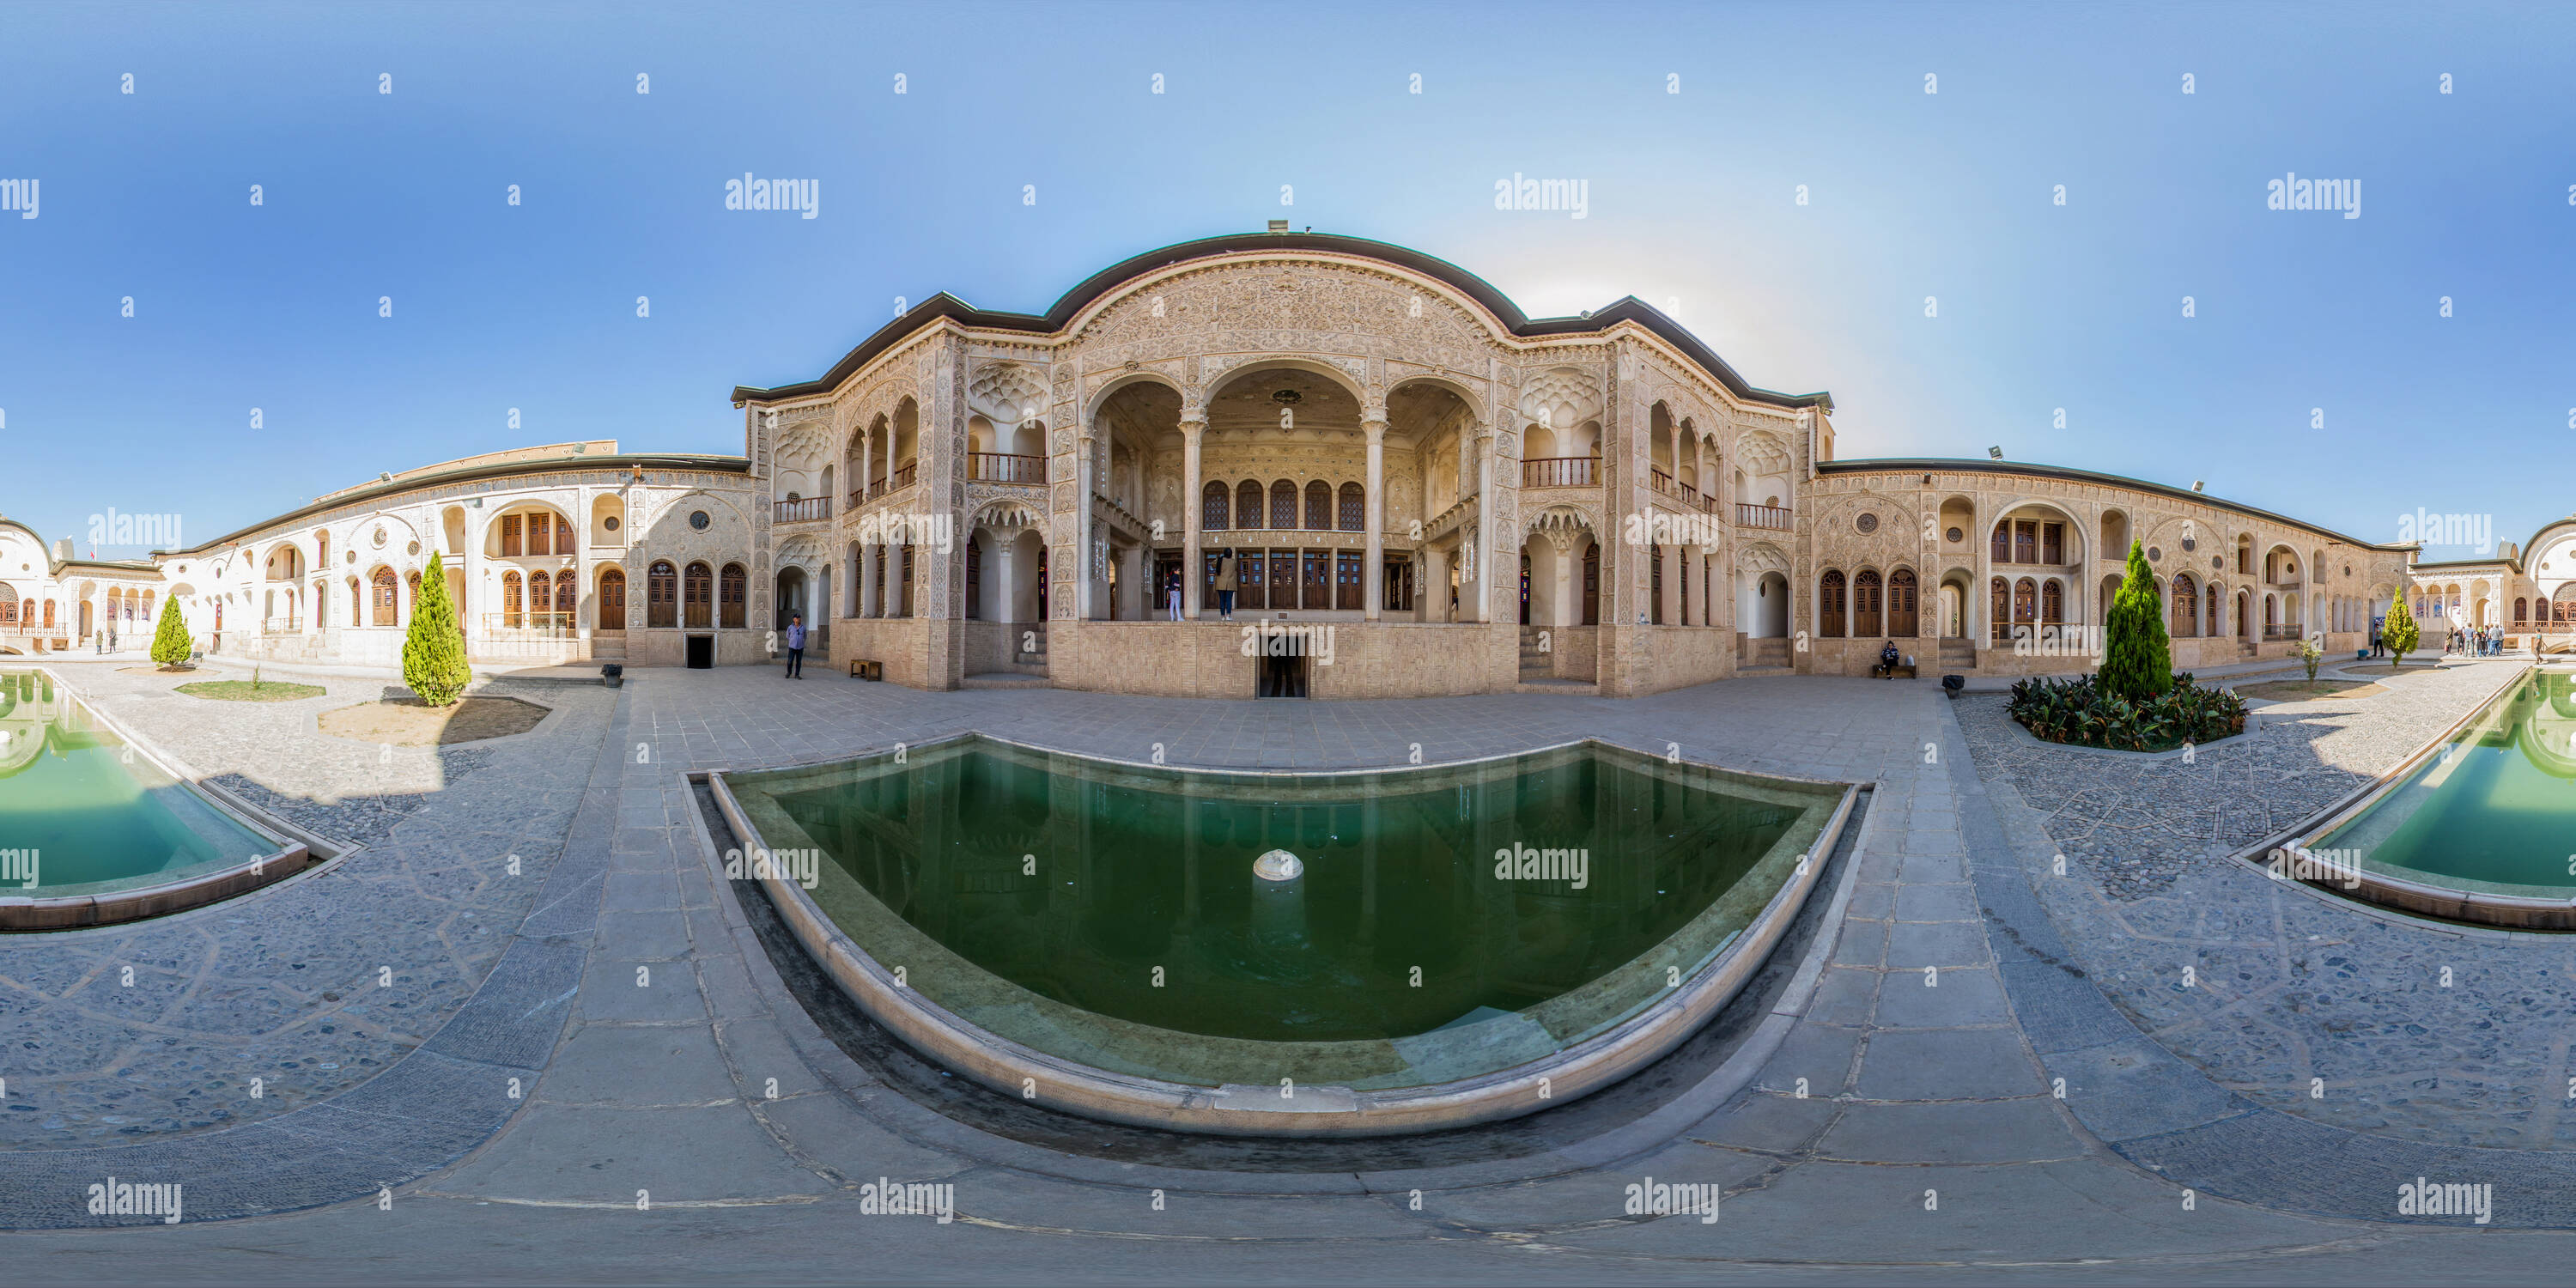 360 degree panoramic view of Tabatabaei House Iranian Architecture Tabatabaei Historical House The Courtyard Of The Tabatabaei Hous